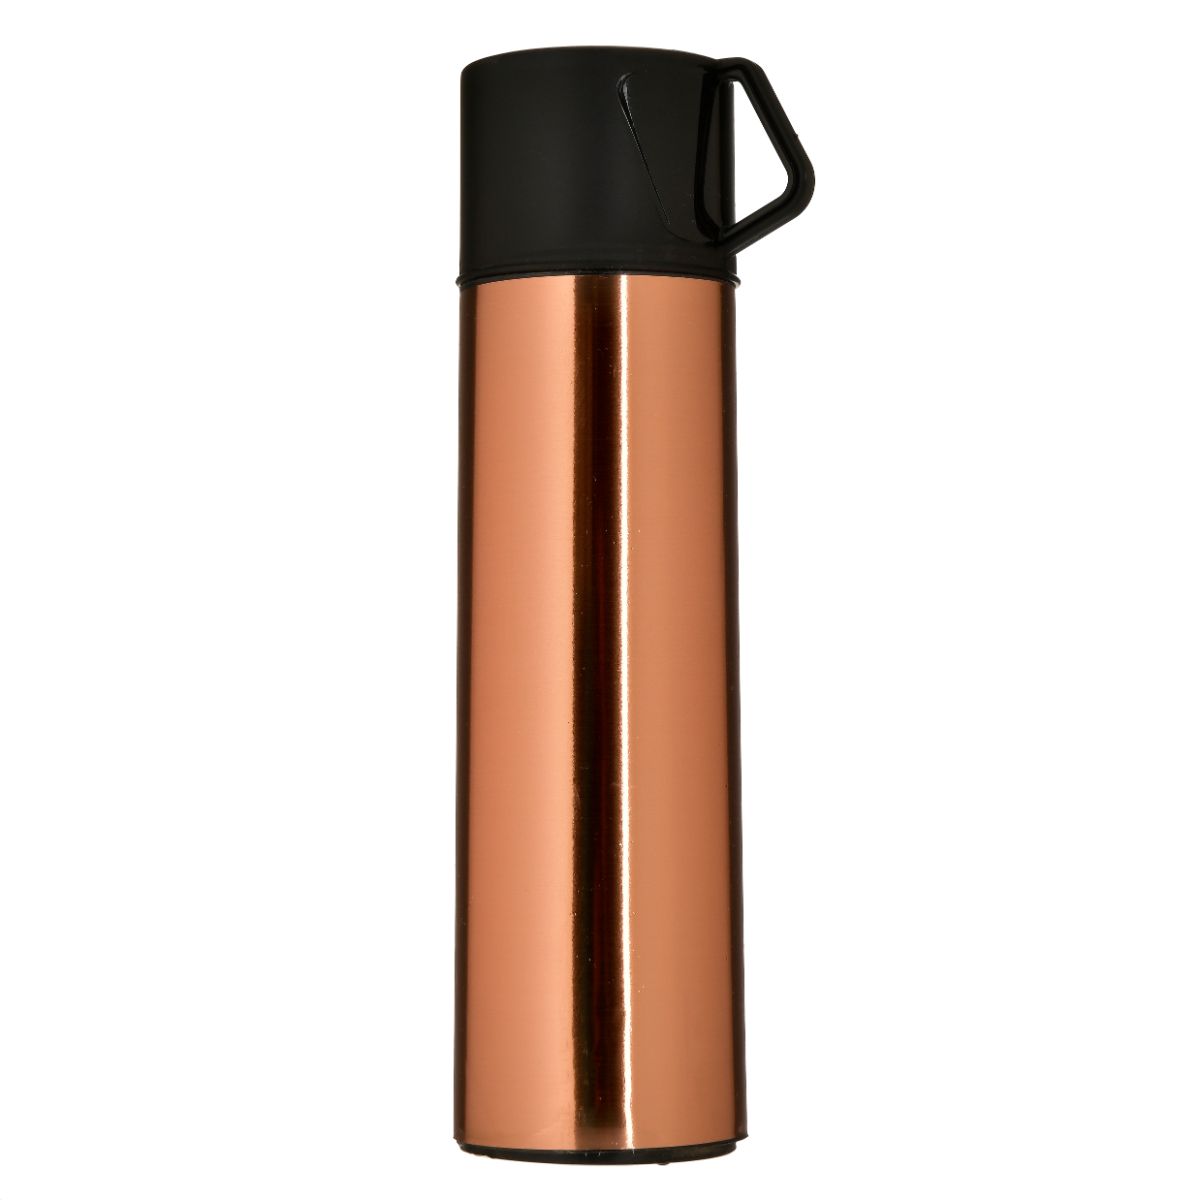 Picnic - Termos cu capac cescuta roz auriu 410 cc, 9.5x7.5x28.5 cm, hectarul.ro